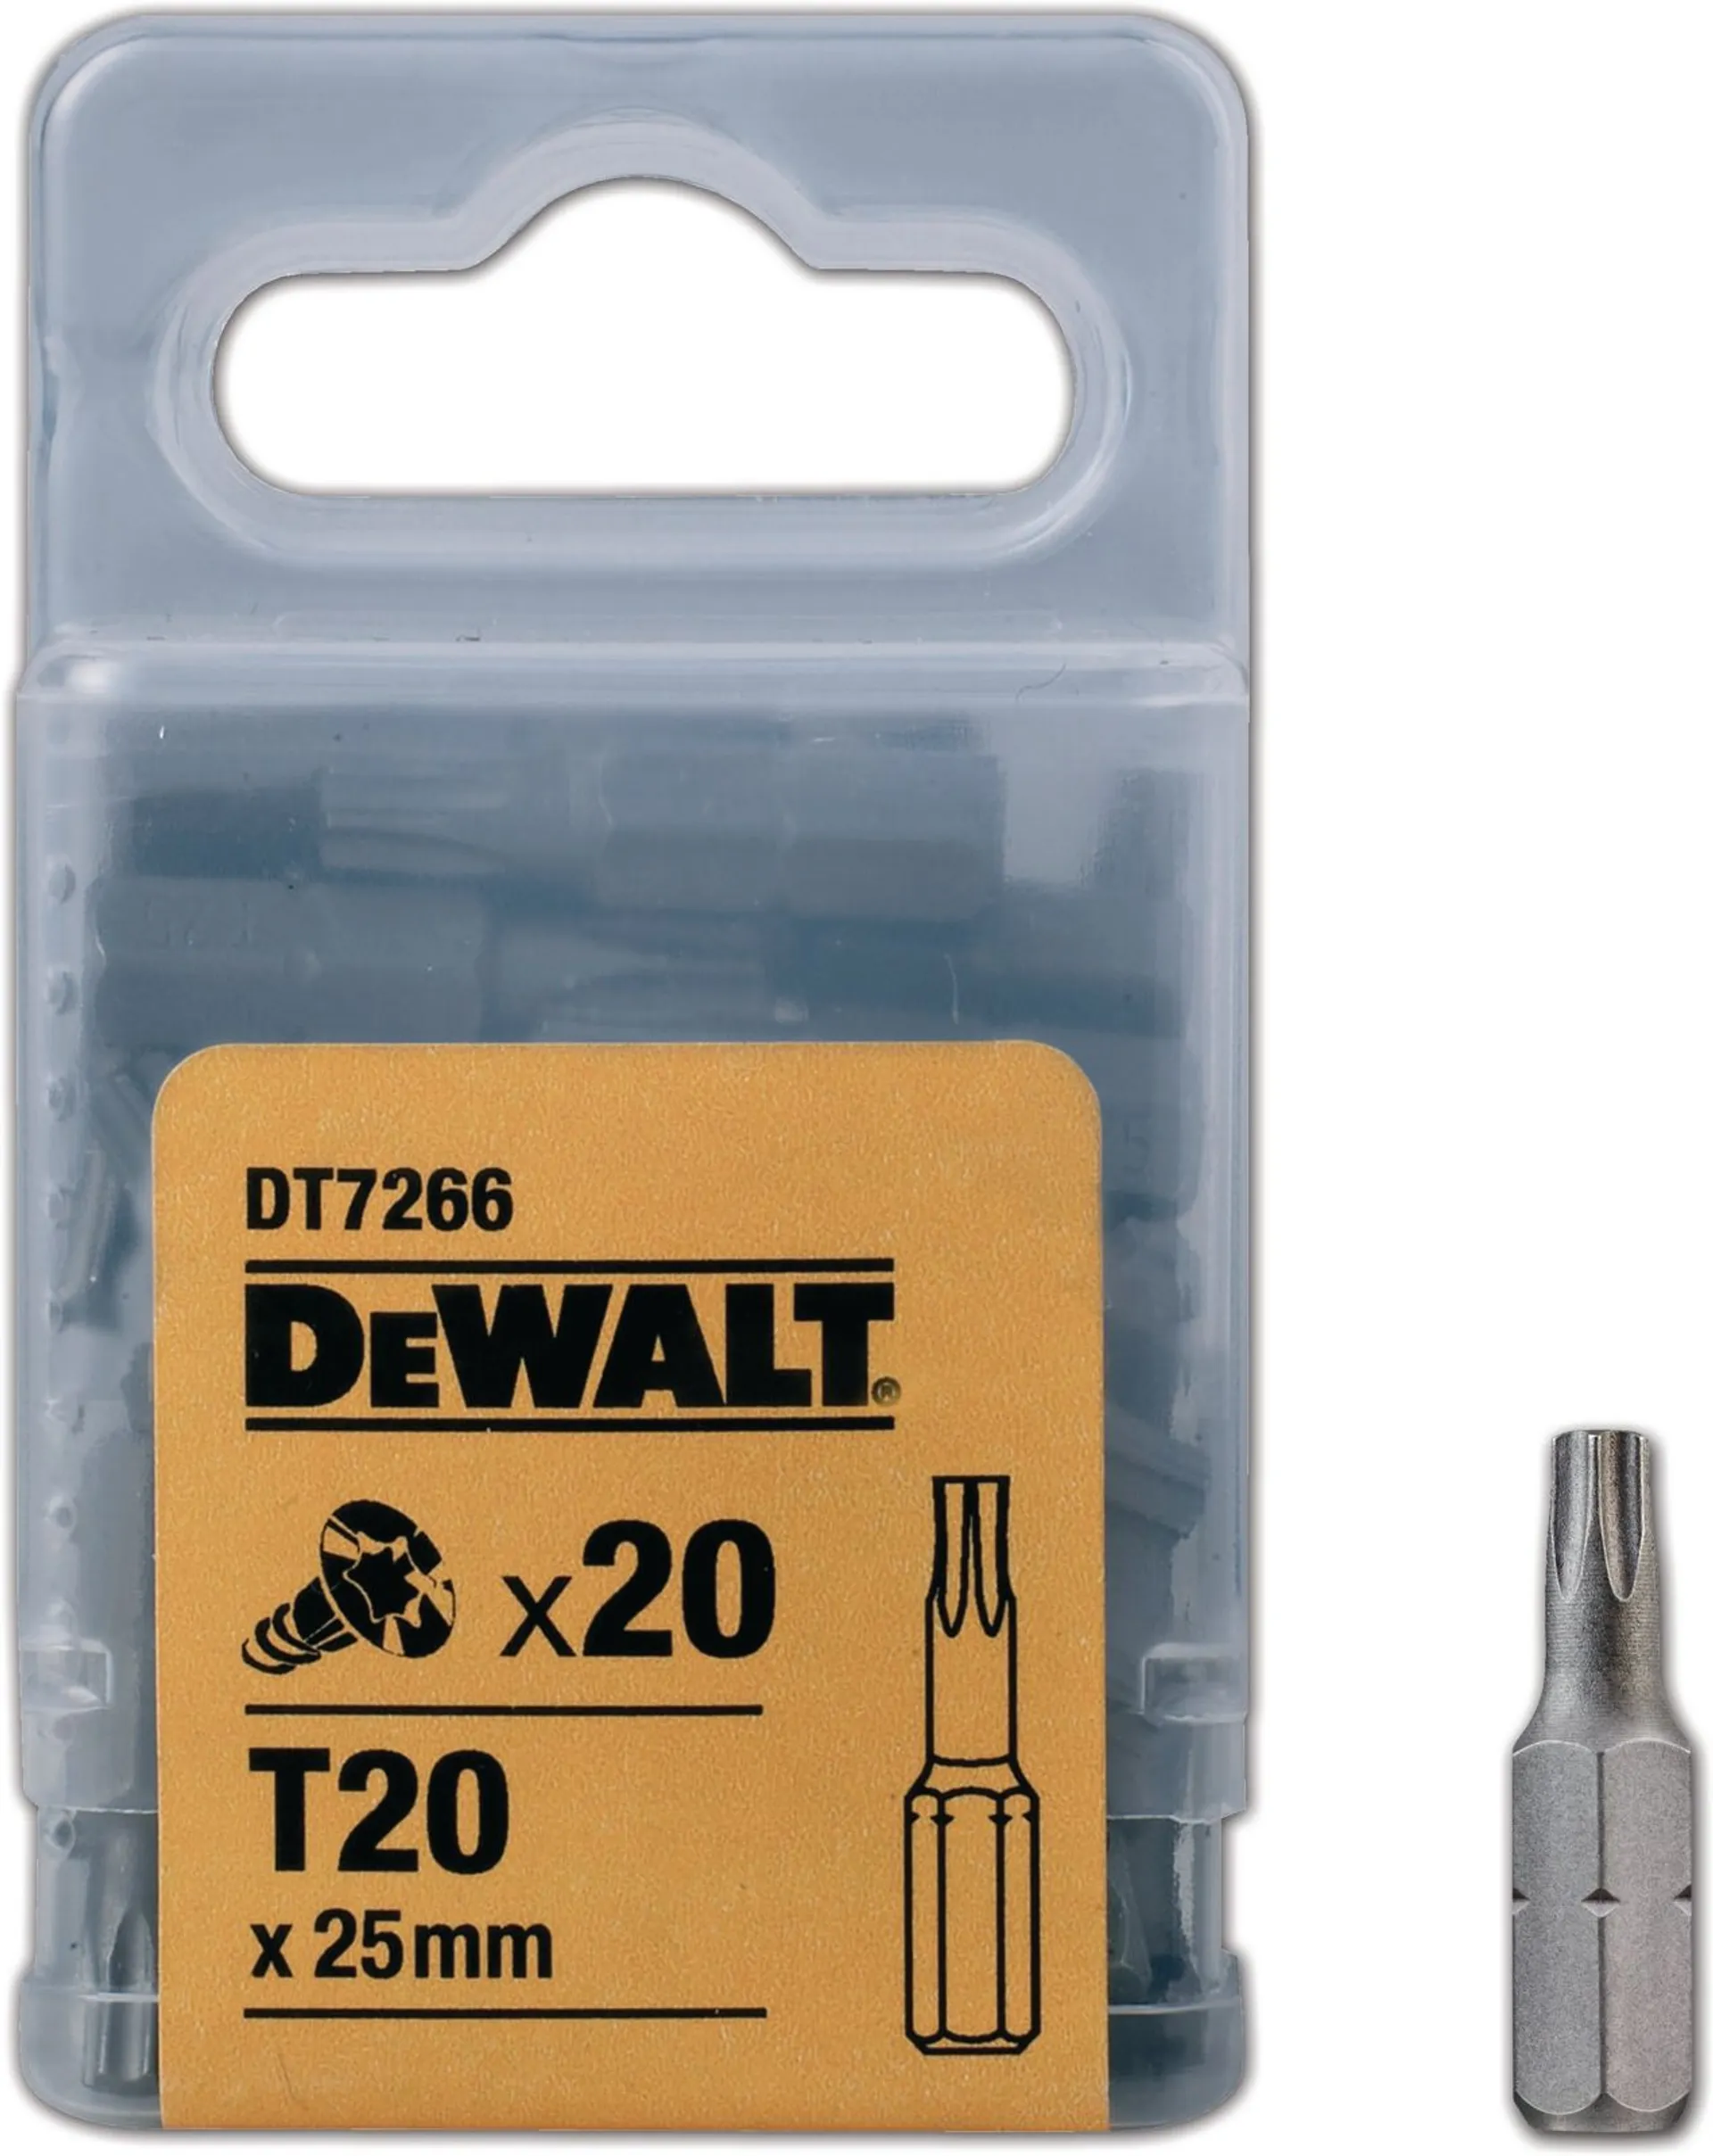 Ruuvauskärkiä Torx-ruuveille DEWALT DT7266 25 mm, T20, 20 kpl